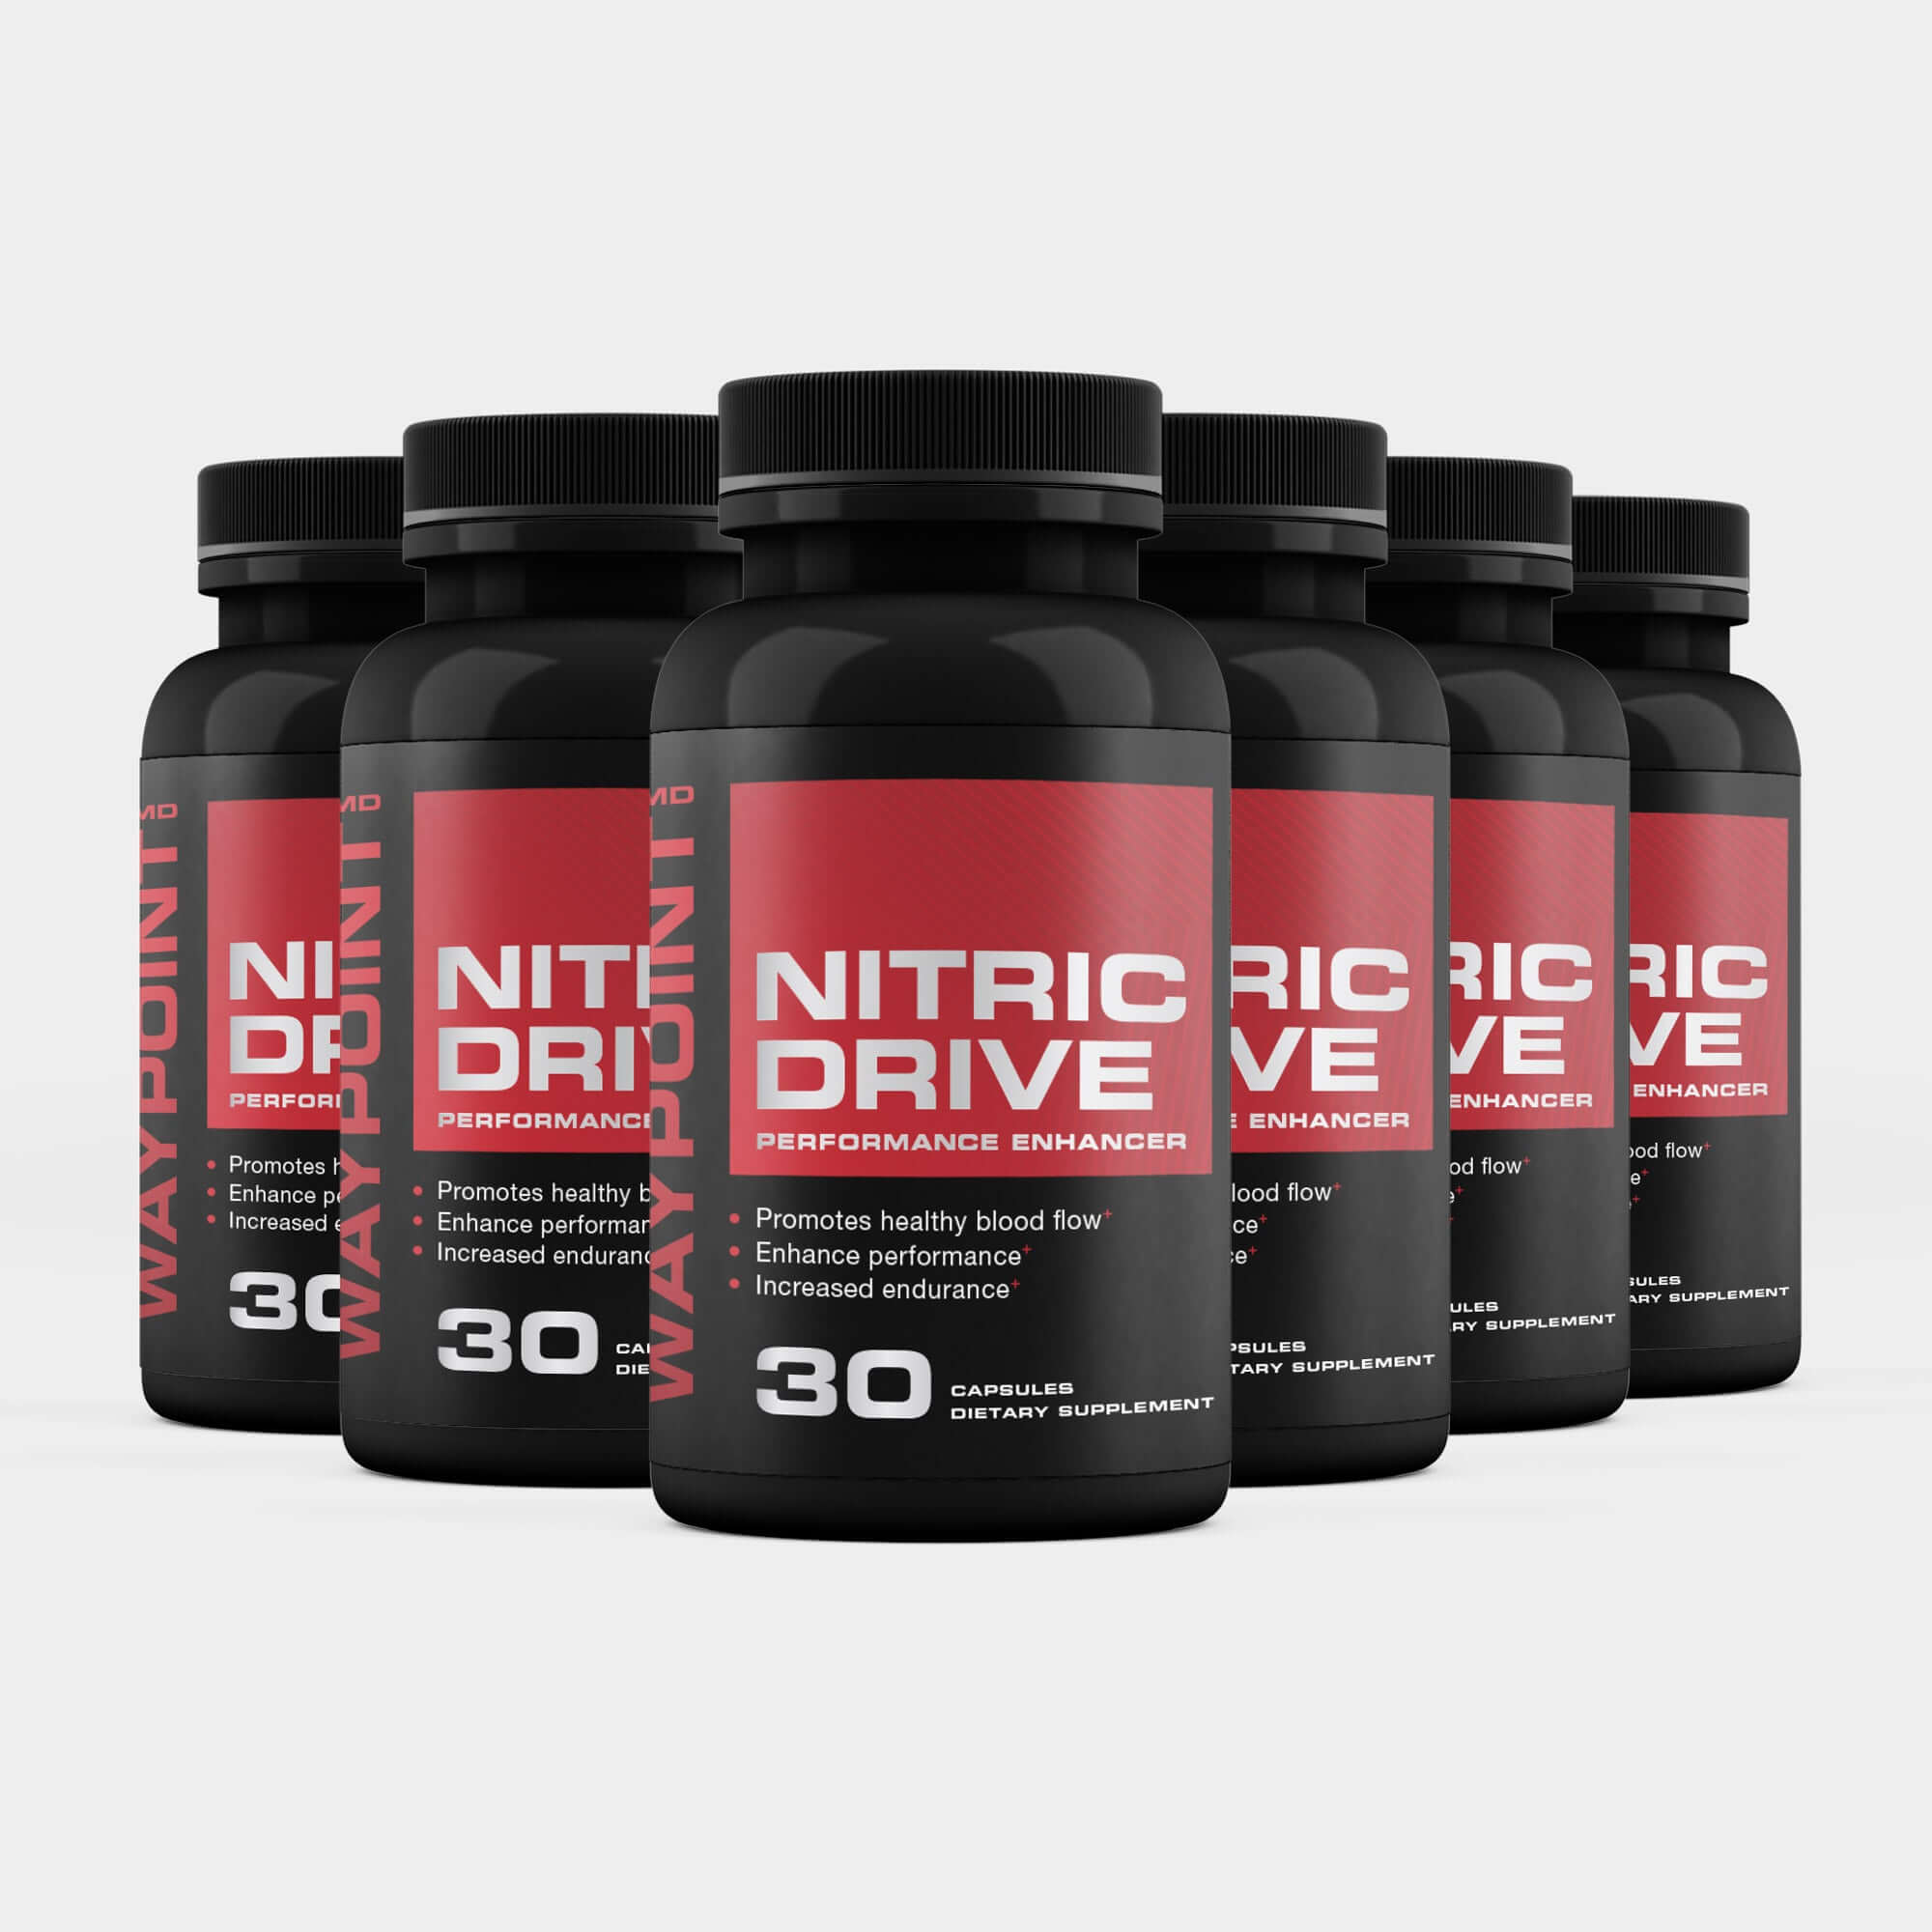 nitric drive male performance enhancer single bottle 6 bottle subsciption